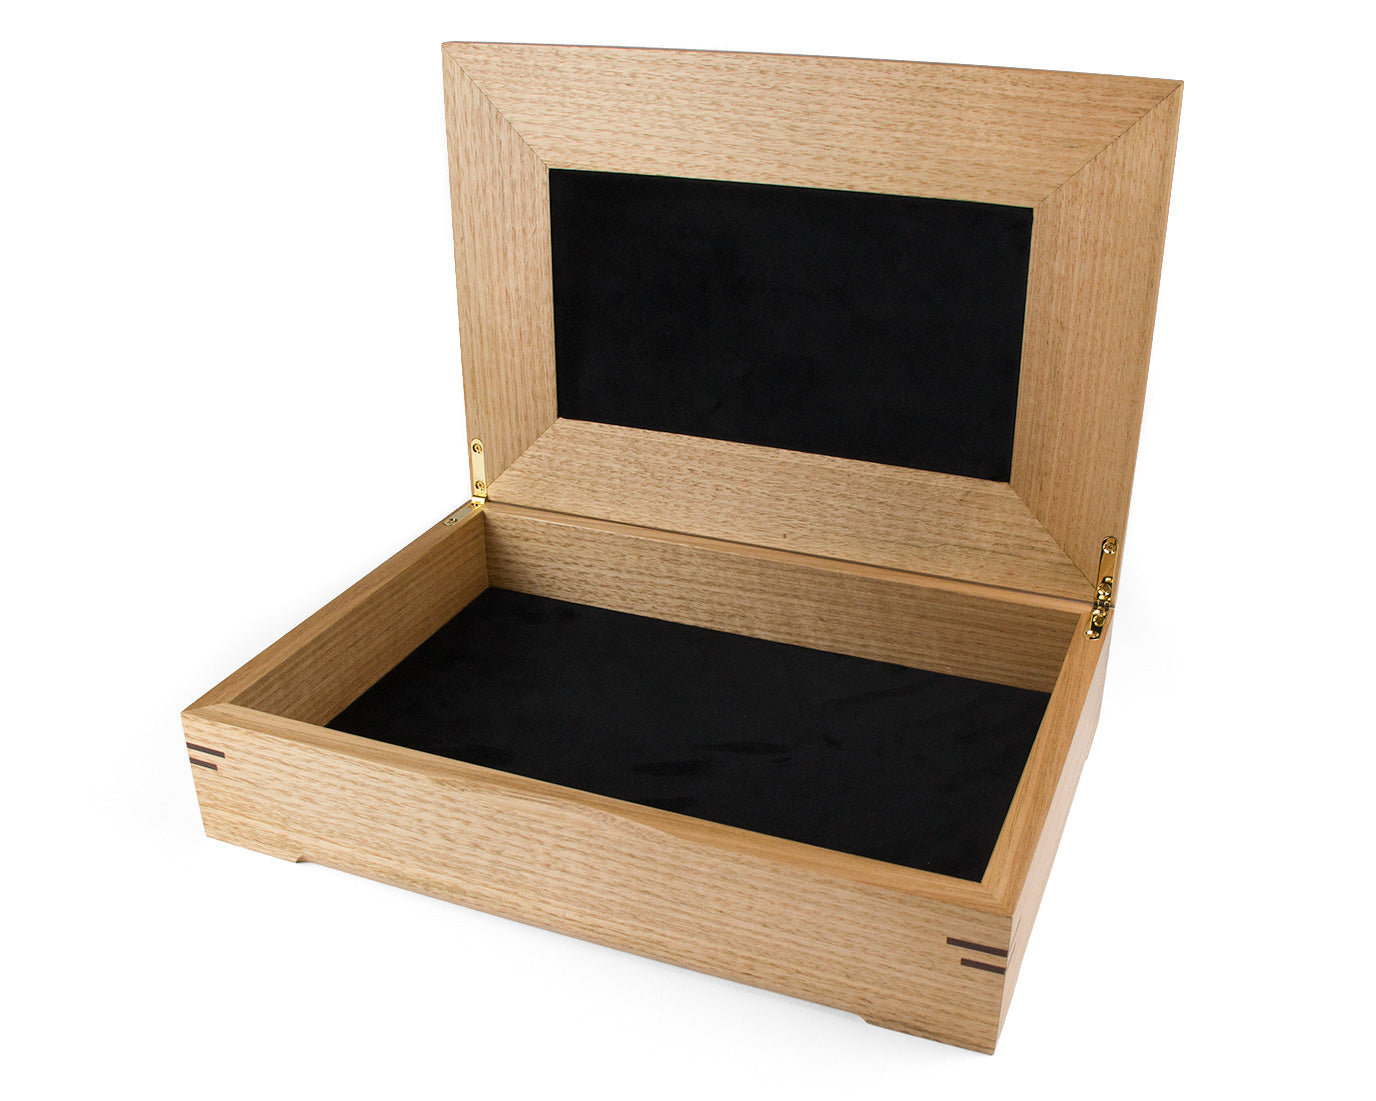 Wooden Document Box handcrafted from Tasmanian Oak & Walnut Burl veneer